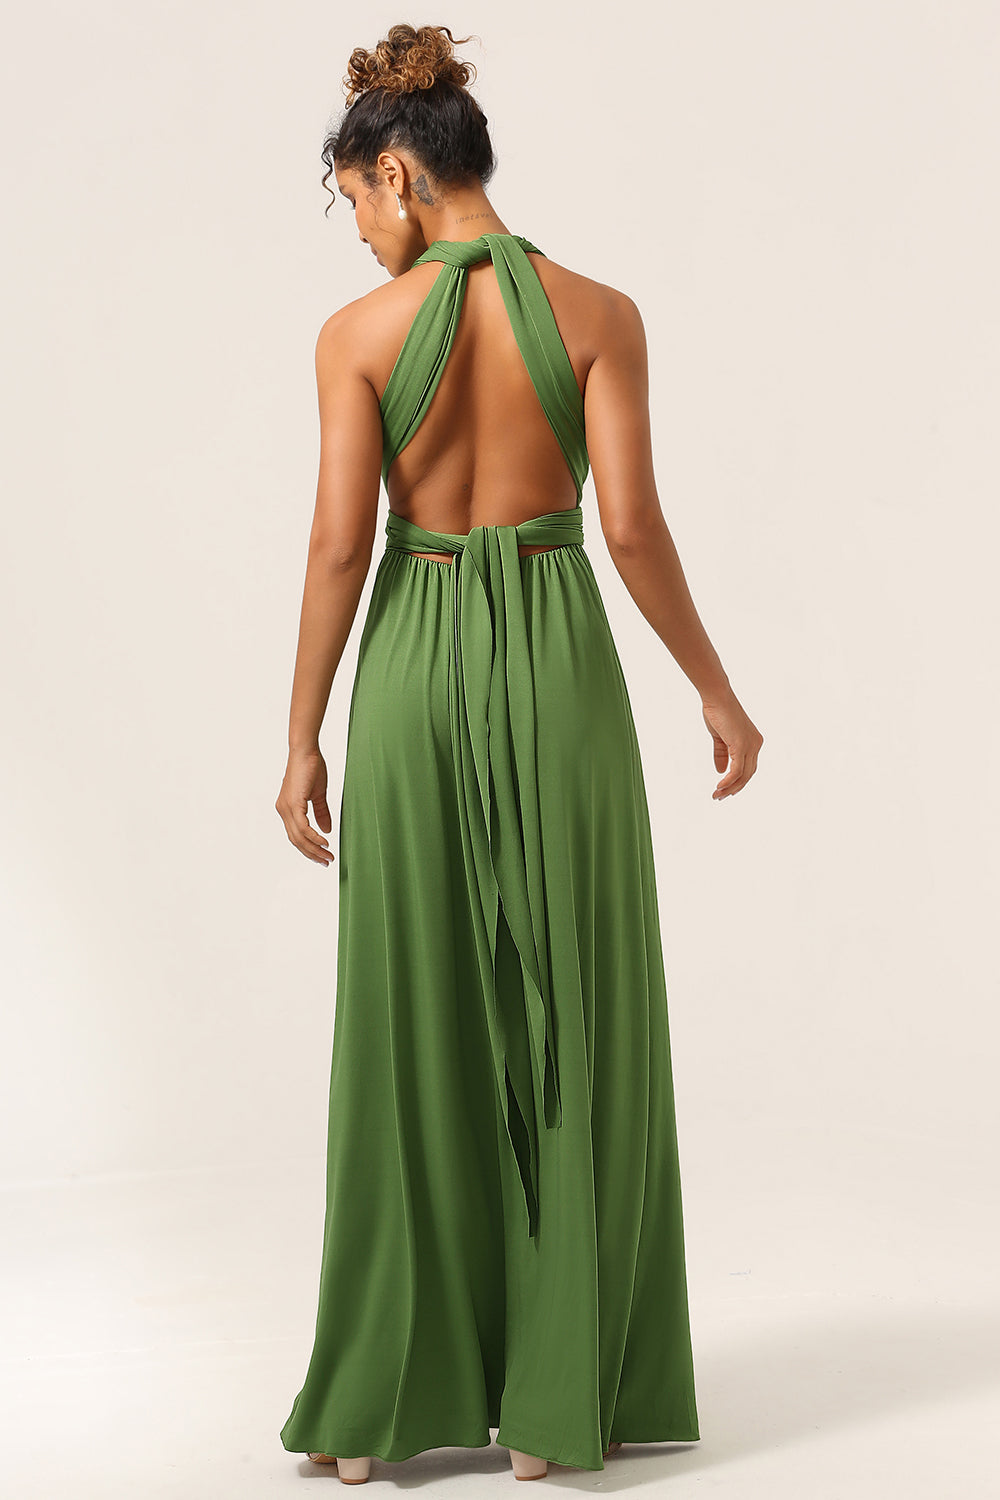 Olive A-Line Spandex Convertible Wear Floor Length Bridesmaid Dress